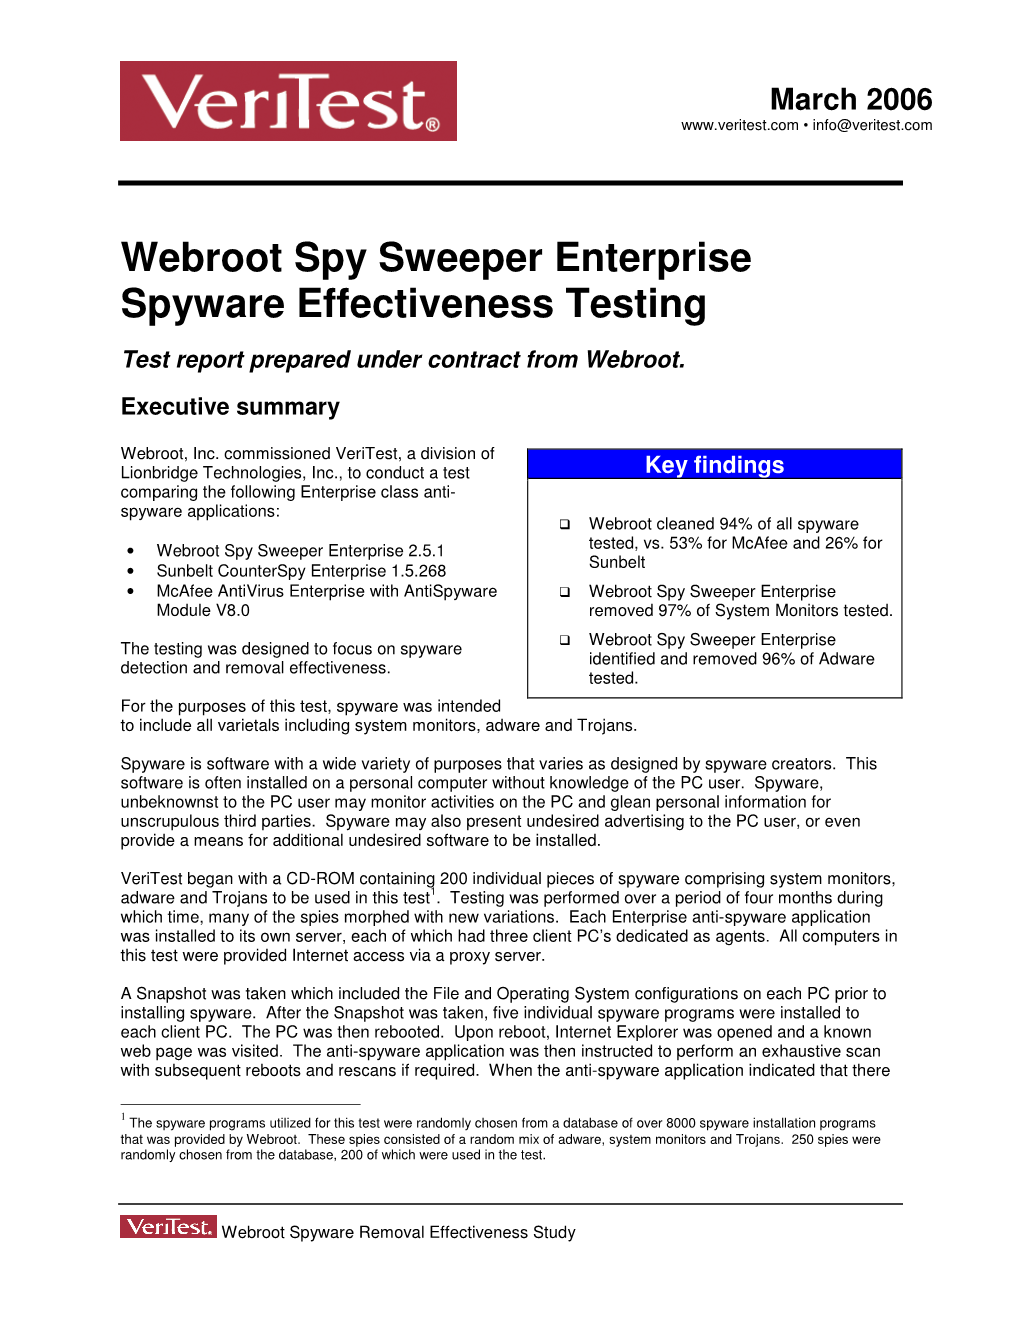 Webroot Spy Sweeper Enterprise Spyware Effectiveness Testing Test Report Prepared Under Contract from Webroot